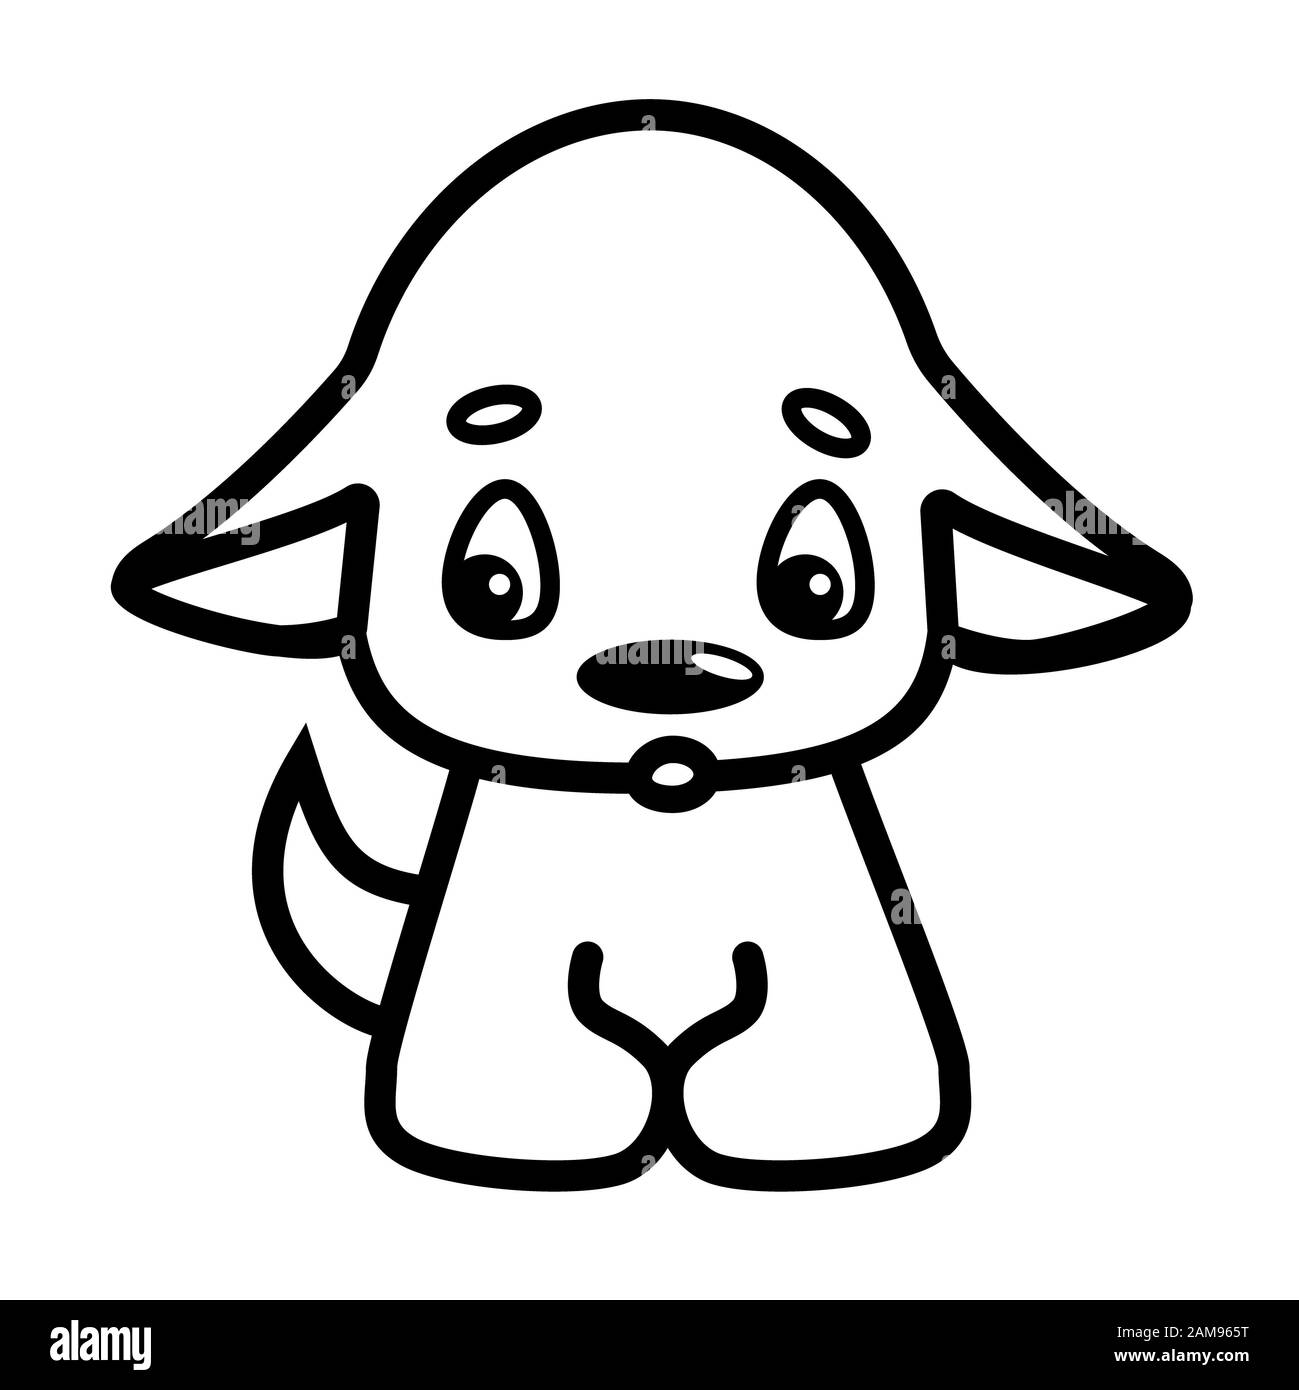 Cartoon Dog Black And White Stock Photos Images Alamy